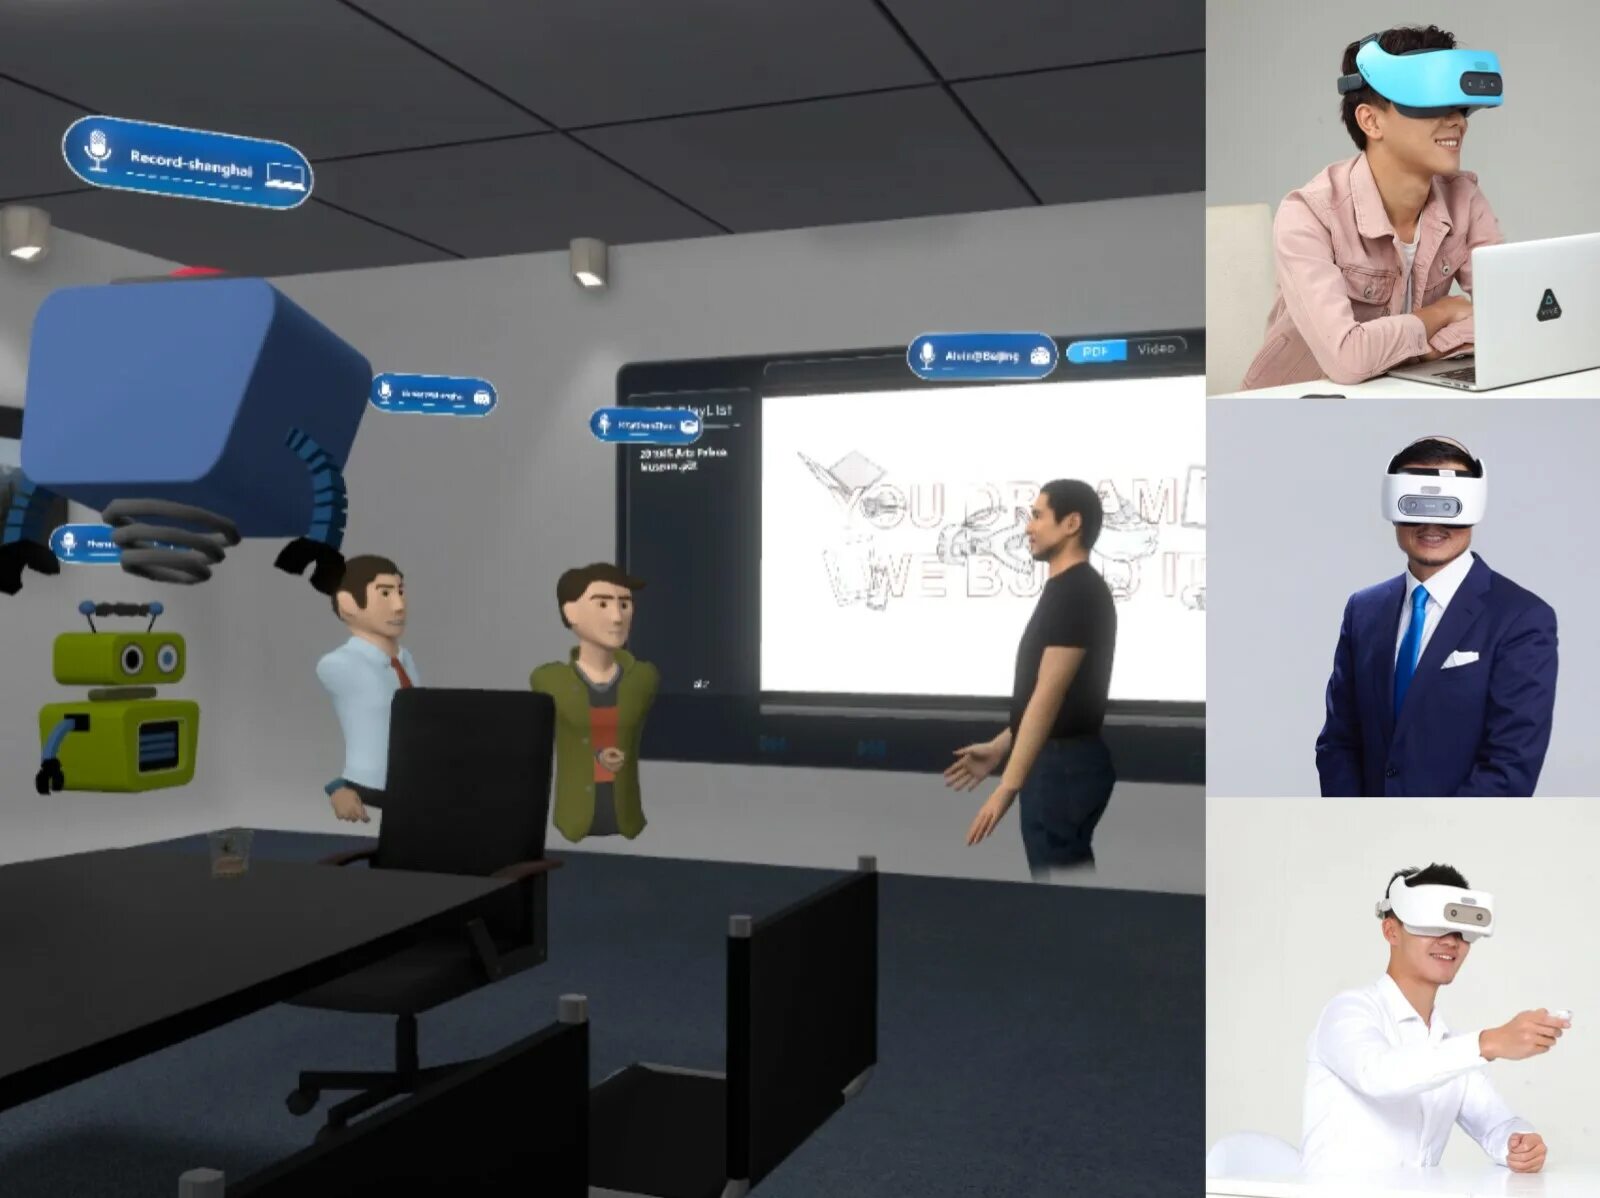 VR офис. VR meeting. Услуги виртуального офиса. VR конференция. Vr office